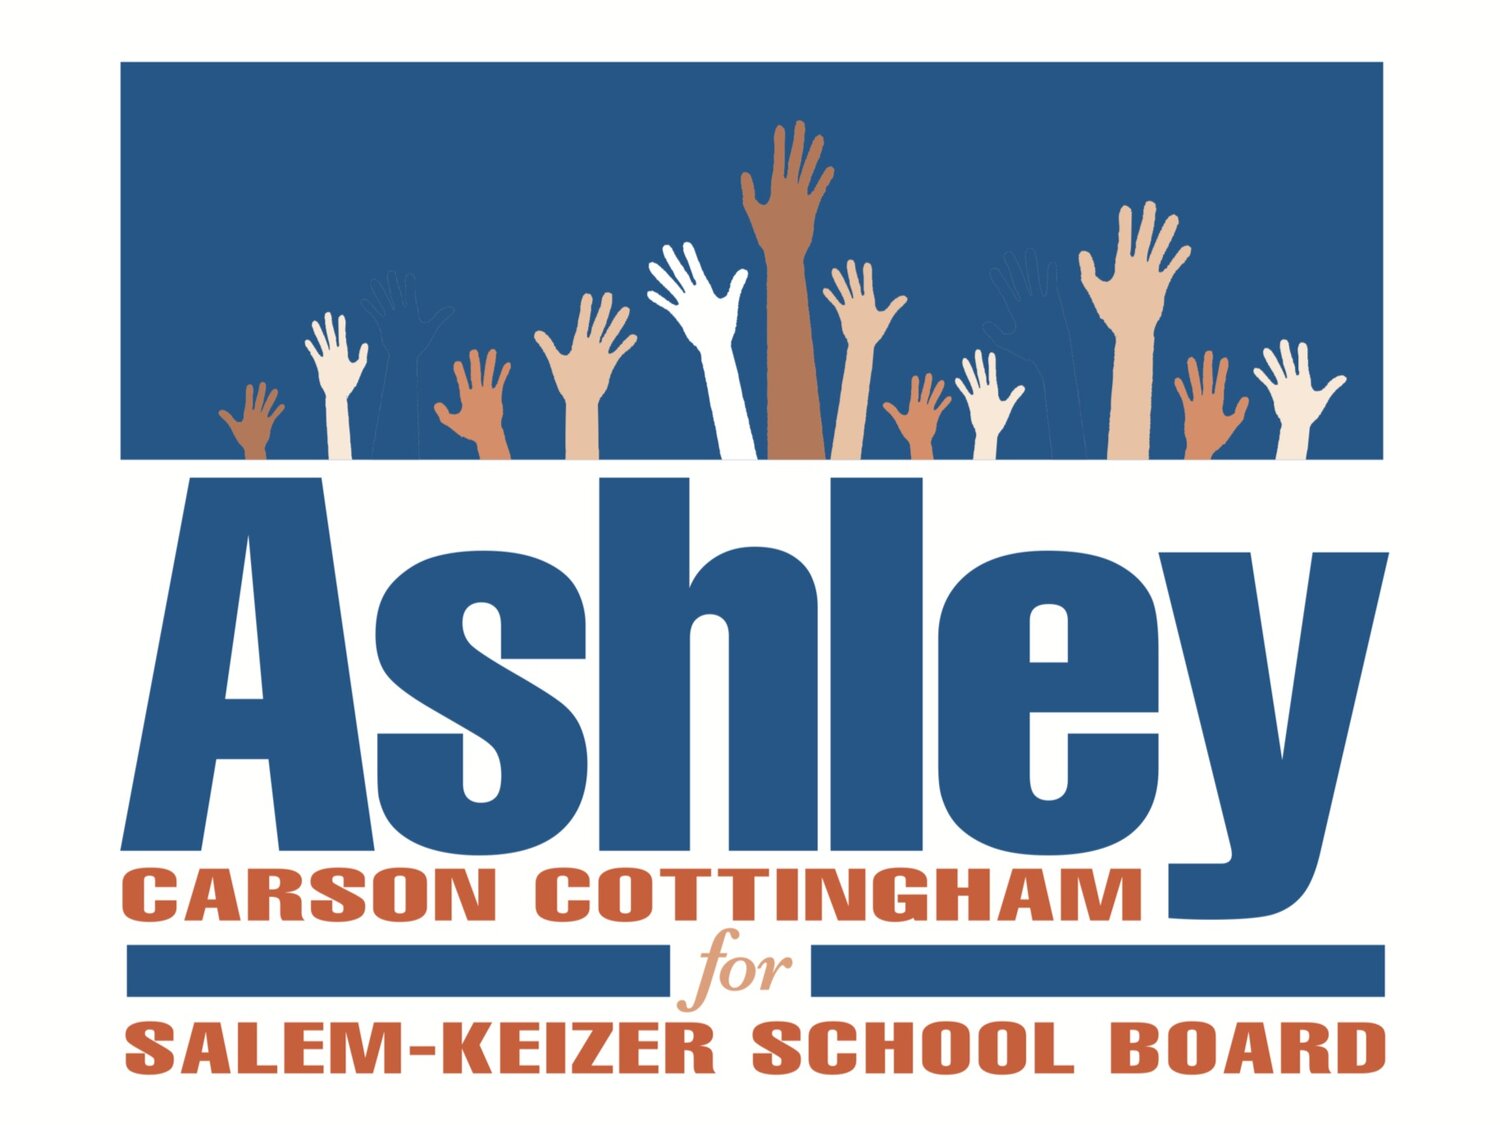 Elect Ashley Carson Cottingham